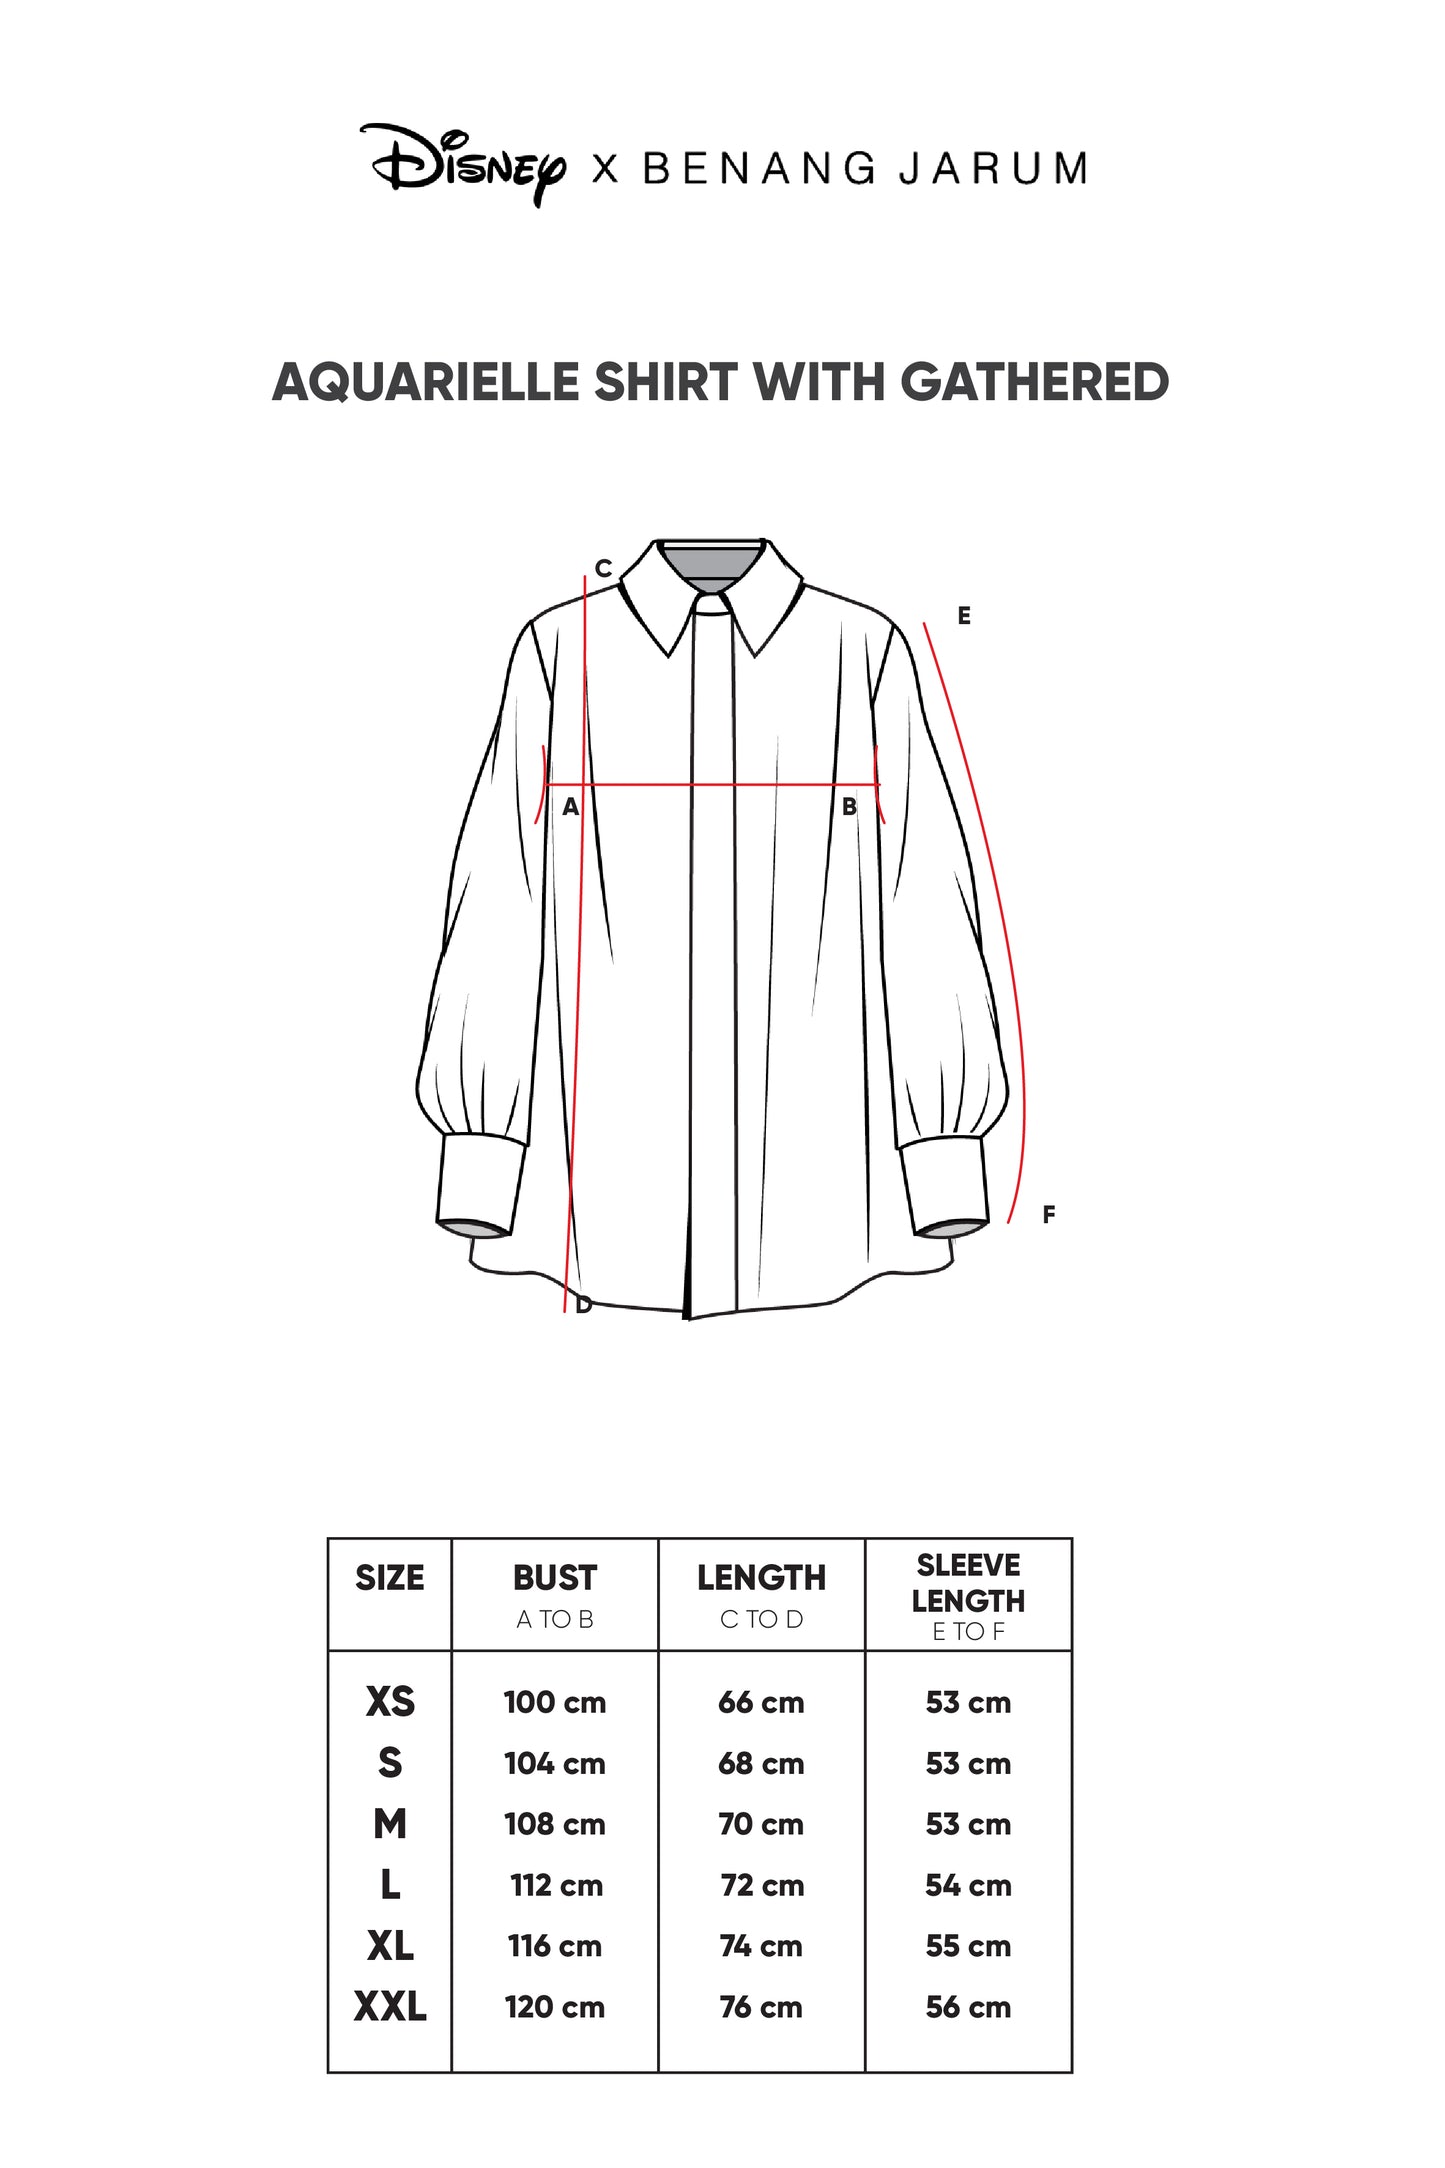 Aquarielle Shirt with Gathered - Ocean